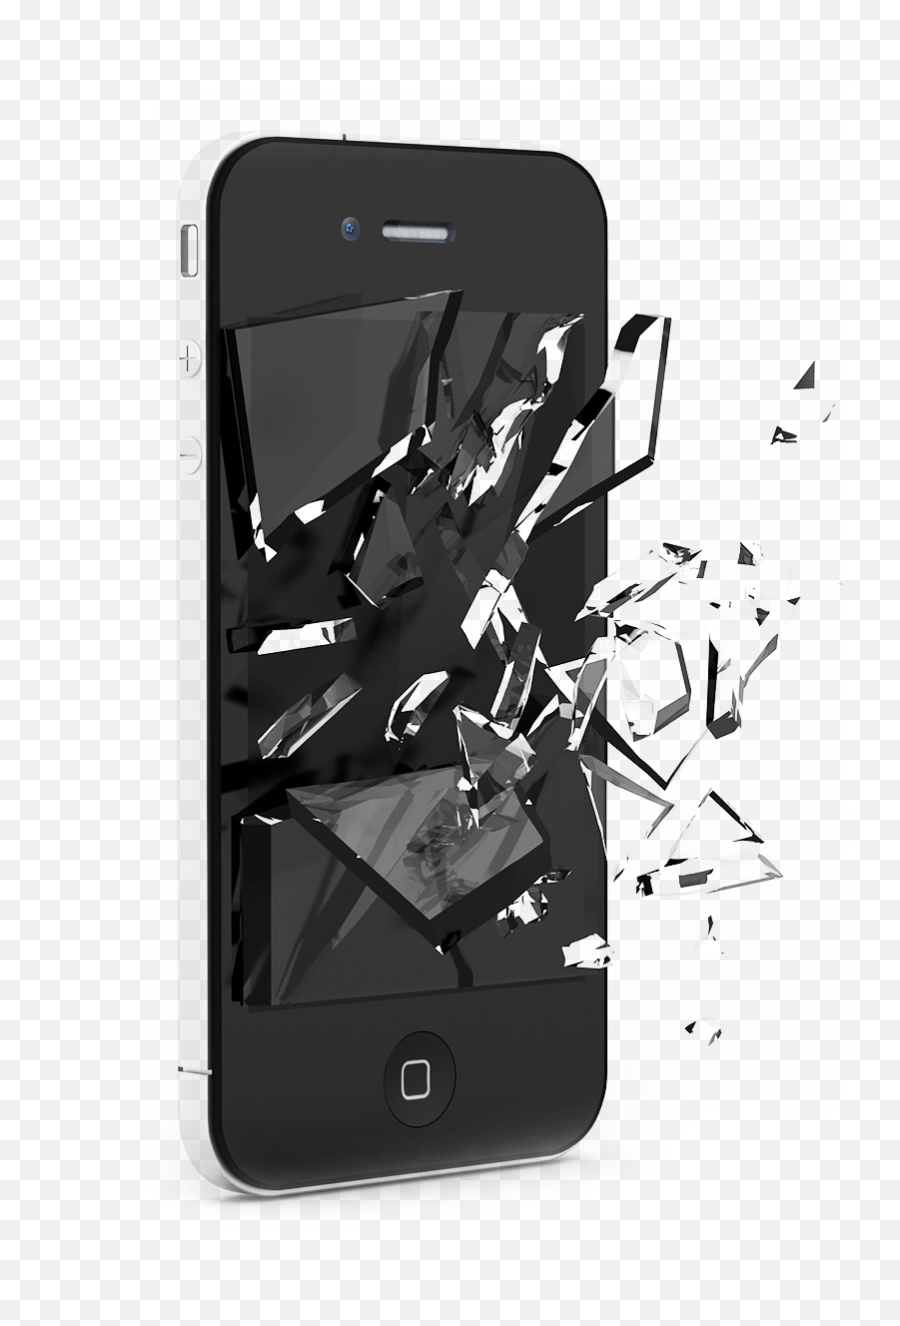 Latest Iphone Rumor Suggests Next Yearu0027s Iphone 8 Will Be Emoji,Broken Iphone Png